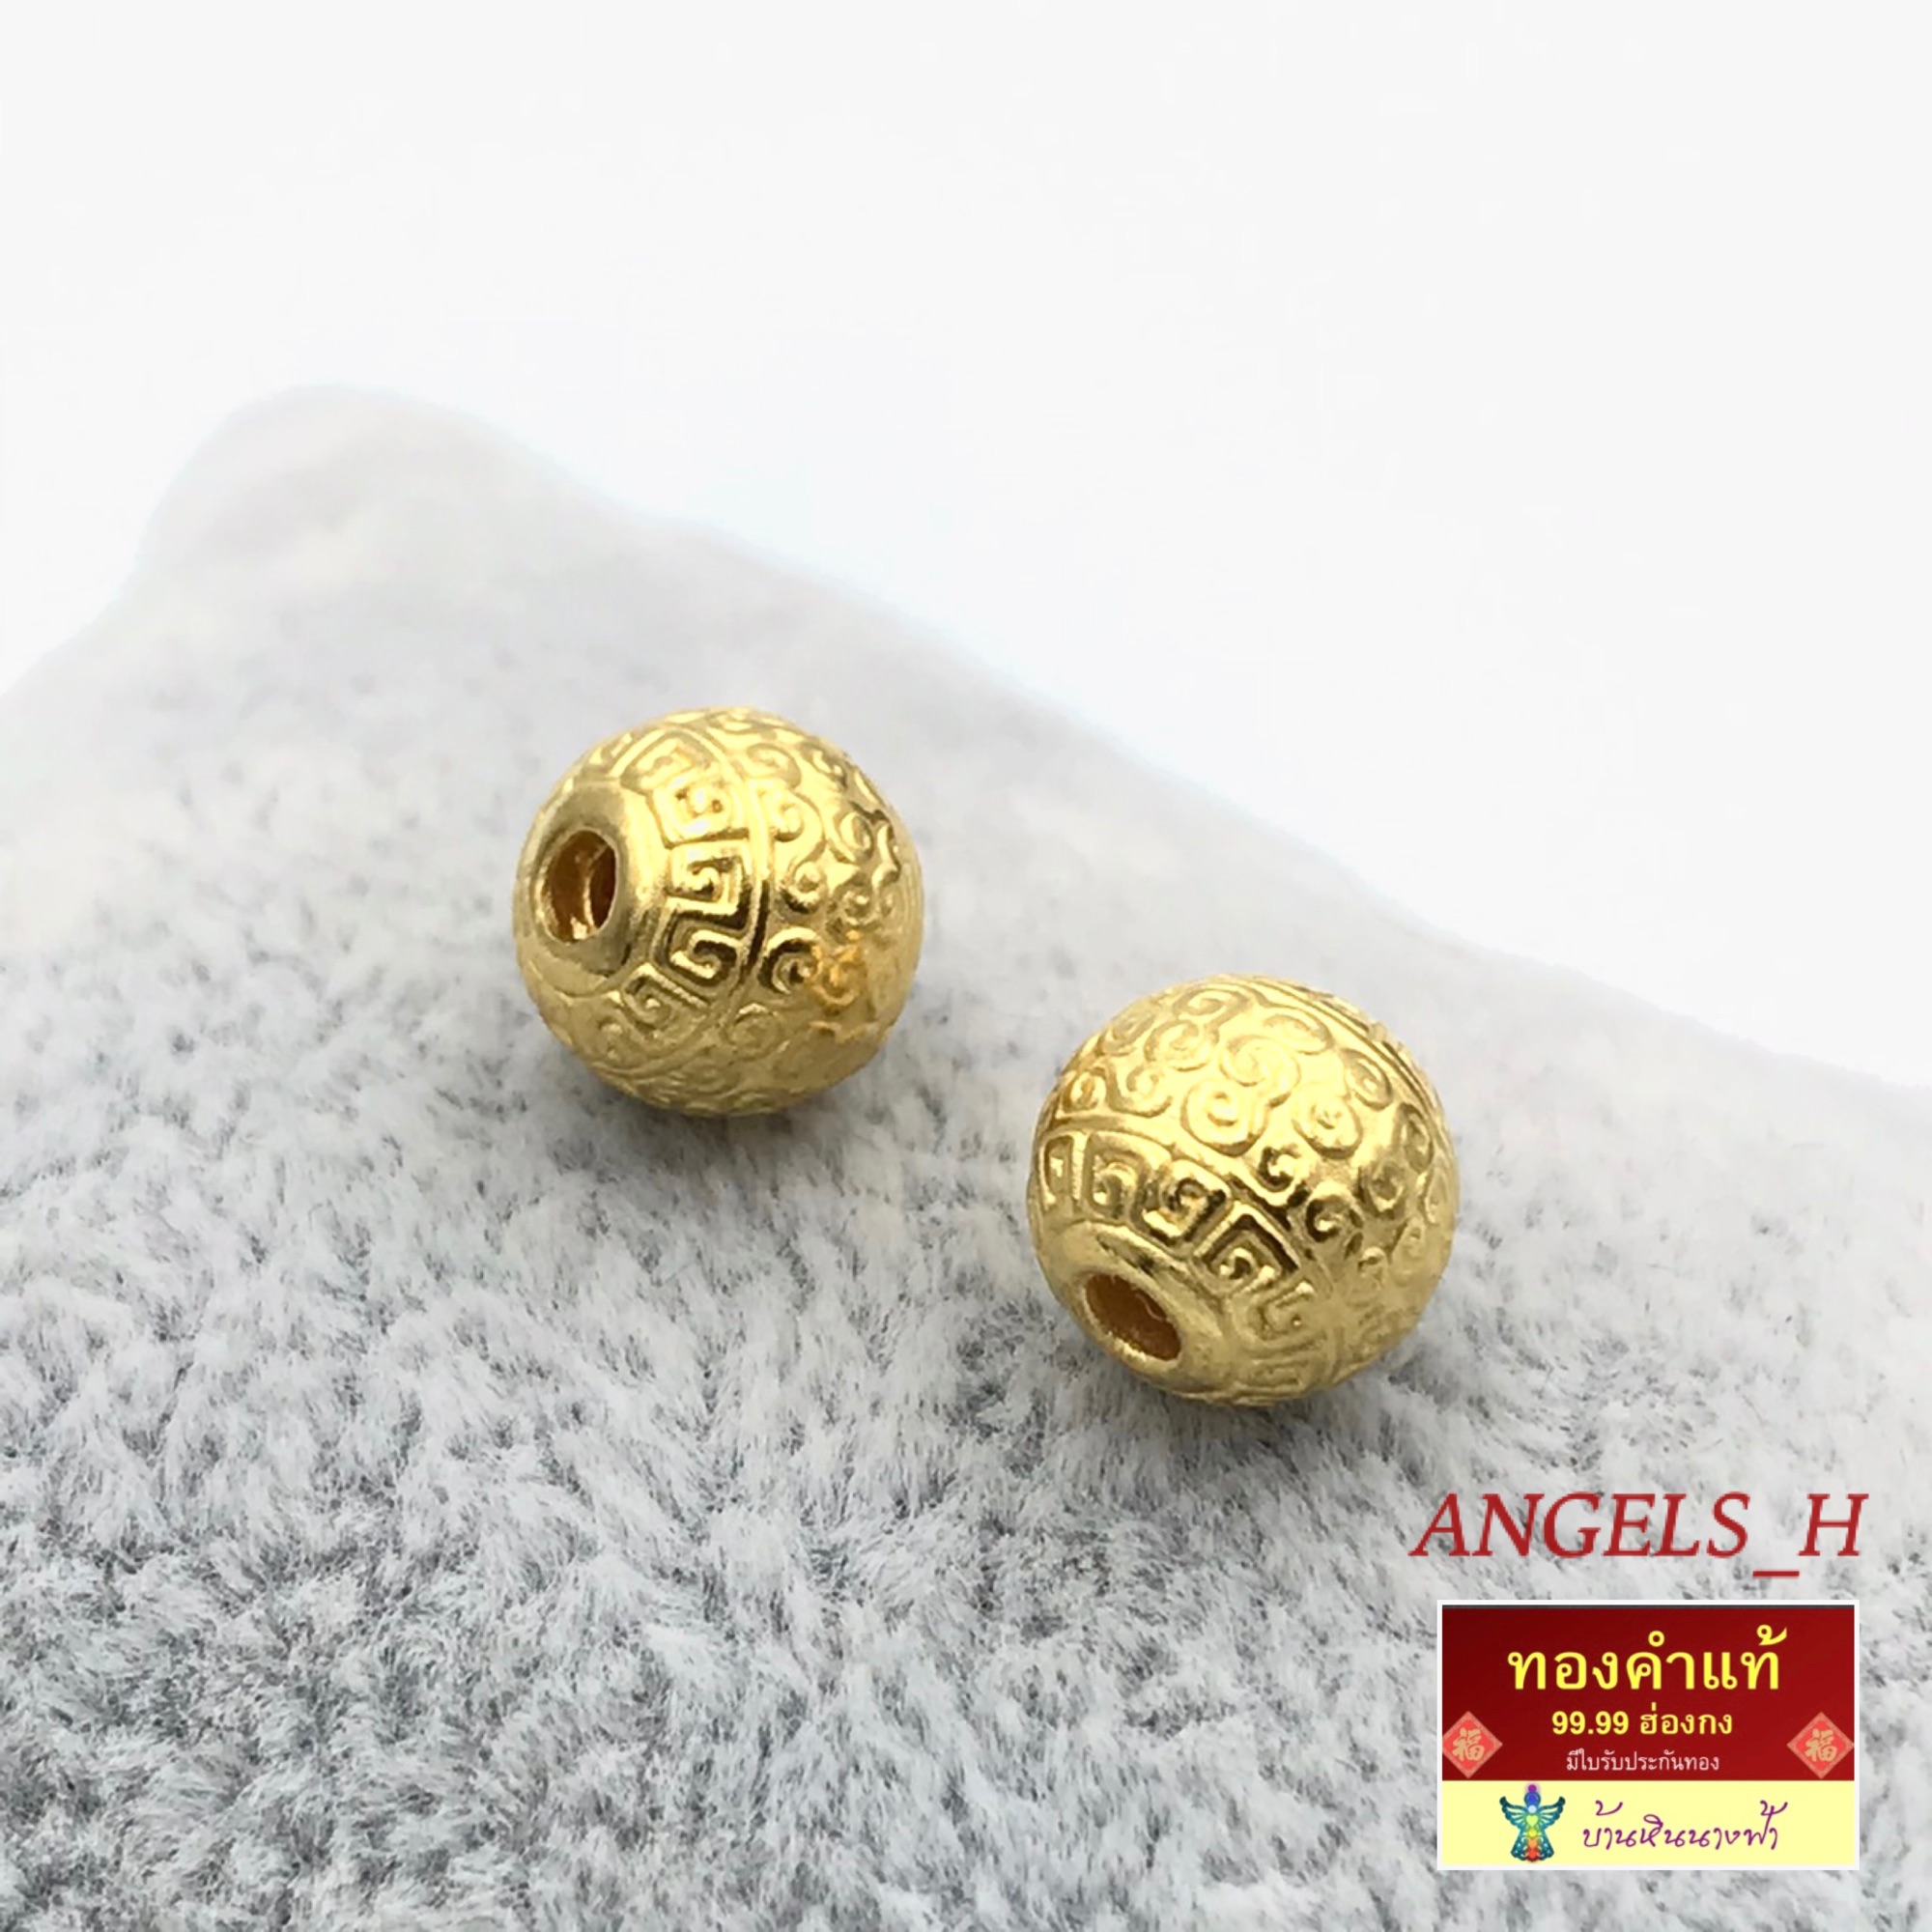 ANGELS_H🧚‍♀️Charm บอลเหรียญสลัก ลูกปัด/เม็ดทอง 8.5 mm. งานฮ่องกง⛩